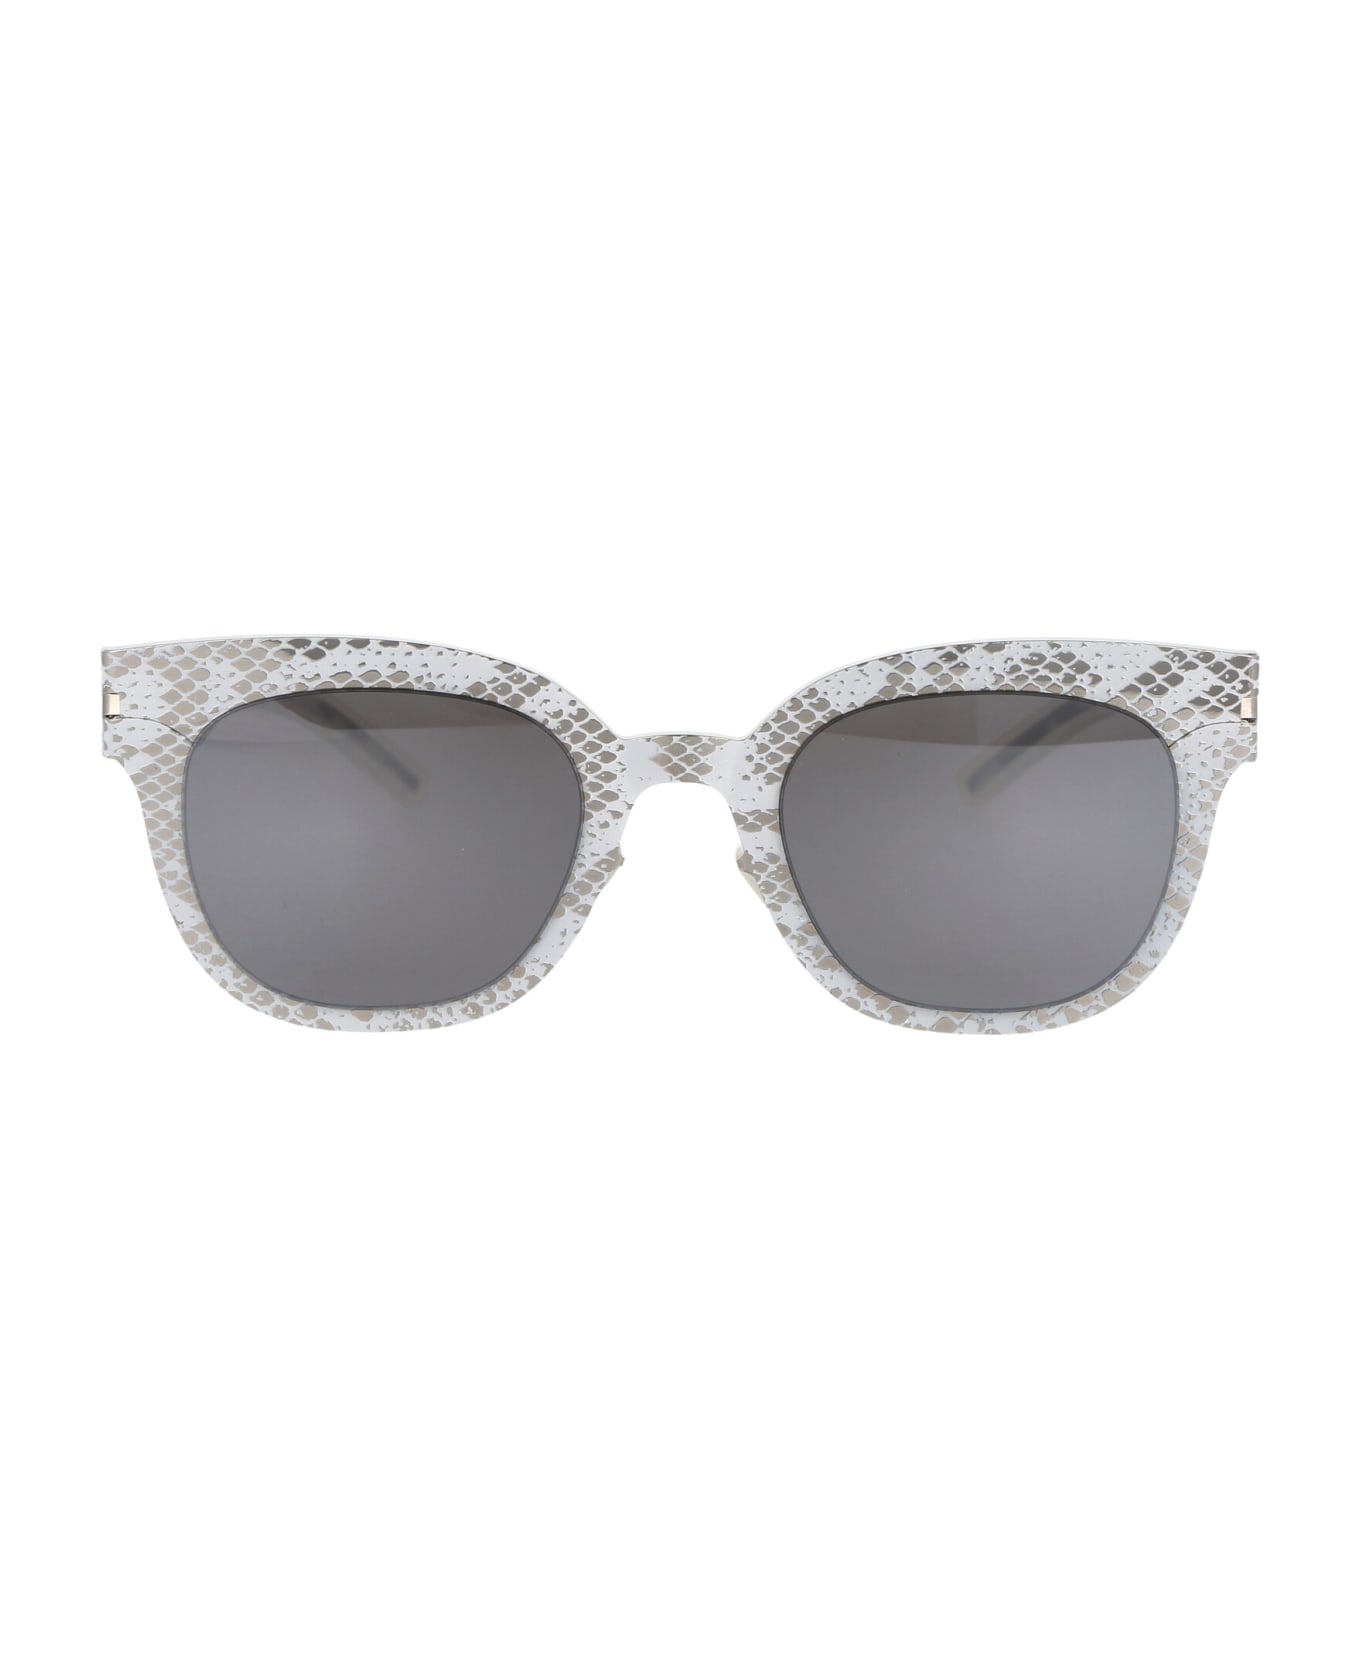 Mykita Mmtransfer002 Sunglasses - 241 Silver White Python Brown Flash